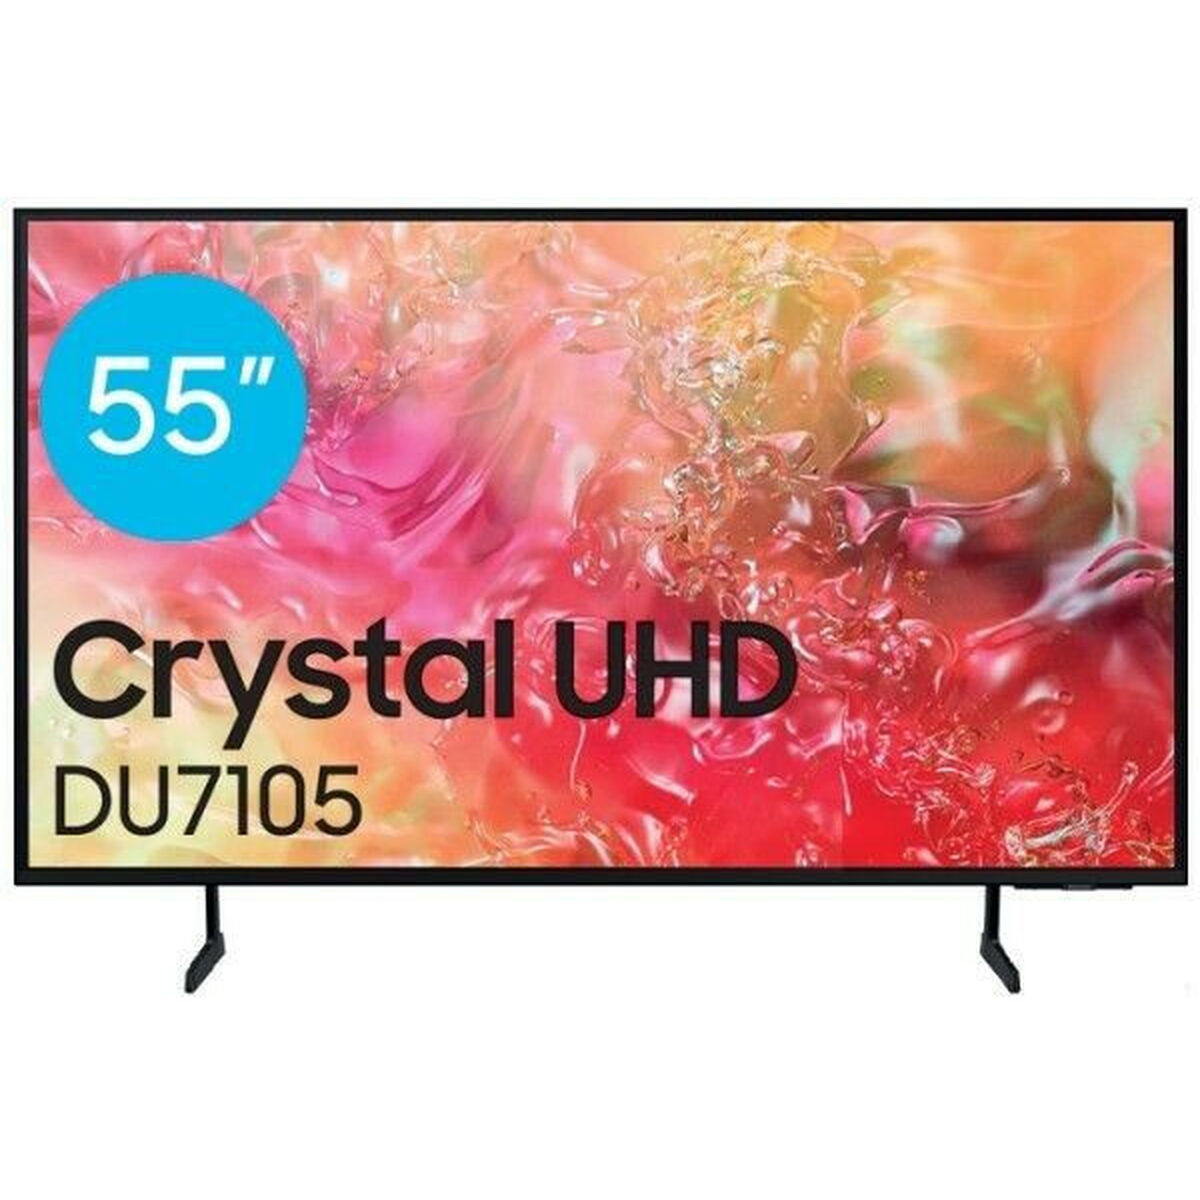 TV intelligente Samsung TU55DU7105 4K Ultra HD 55" LED